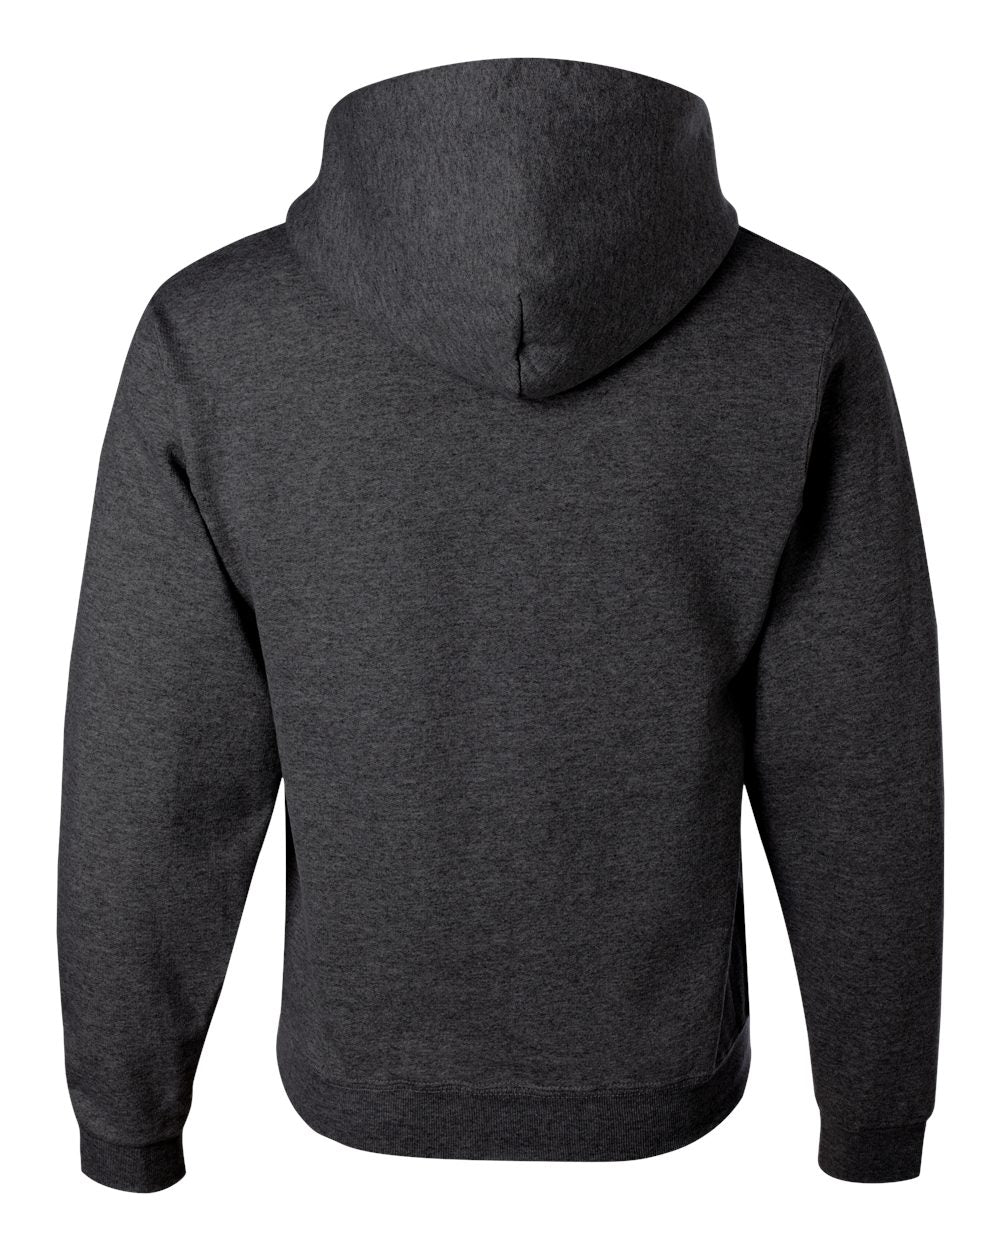 JERZEES NuBlend® Hooded Sweatshirt 996MR #color_Black Heather